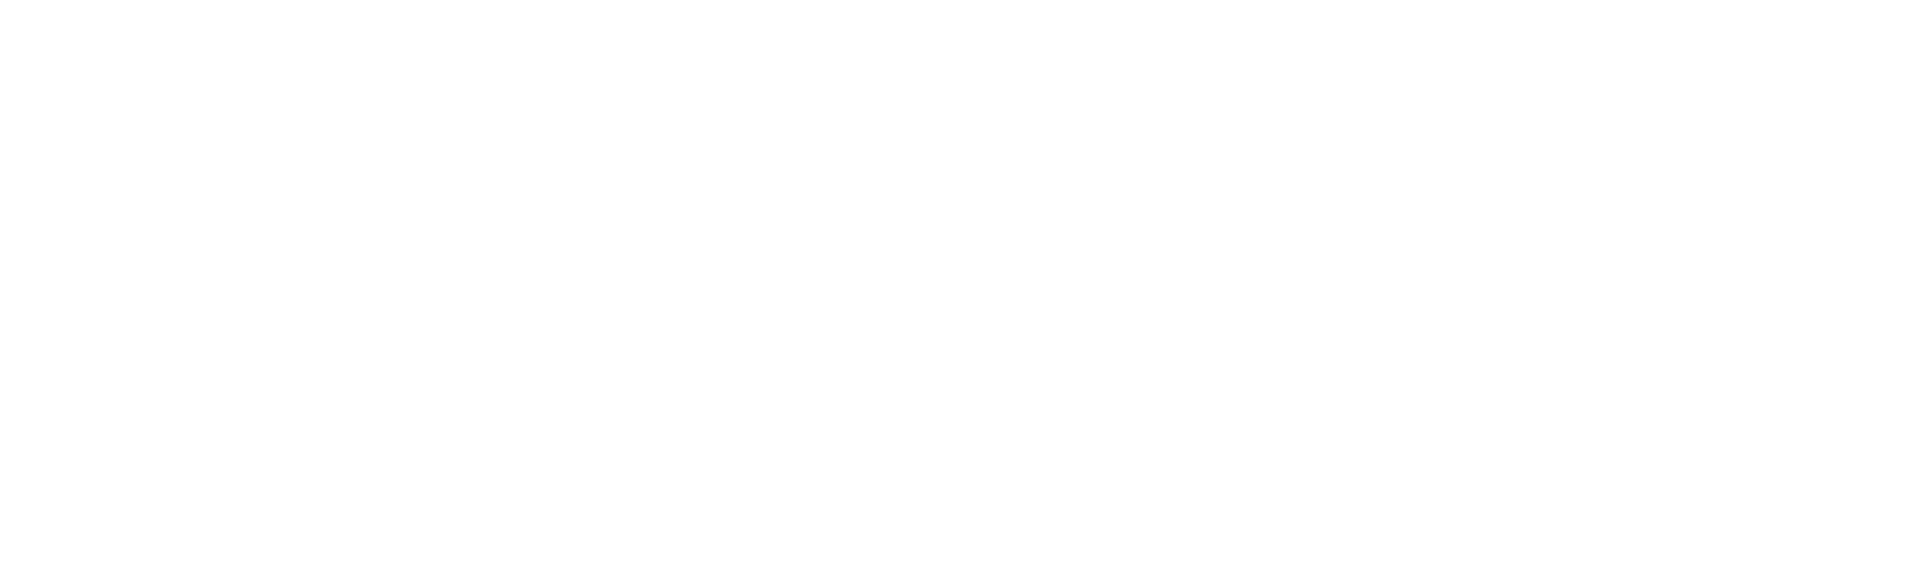 Microsoft-White-Logo-Resized